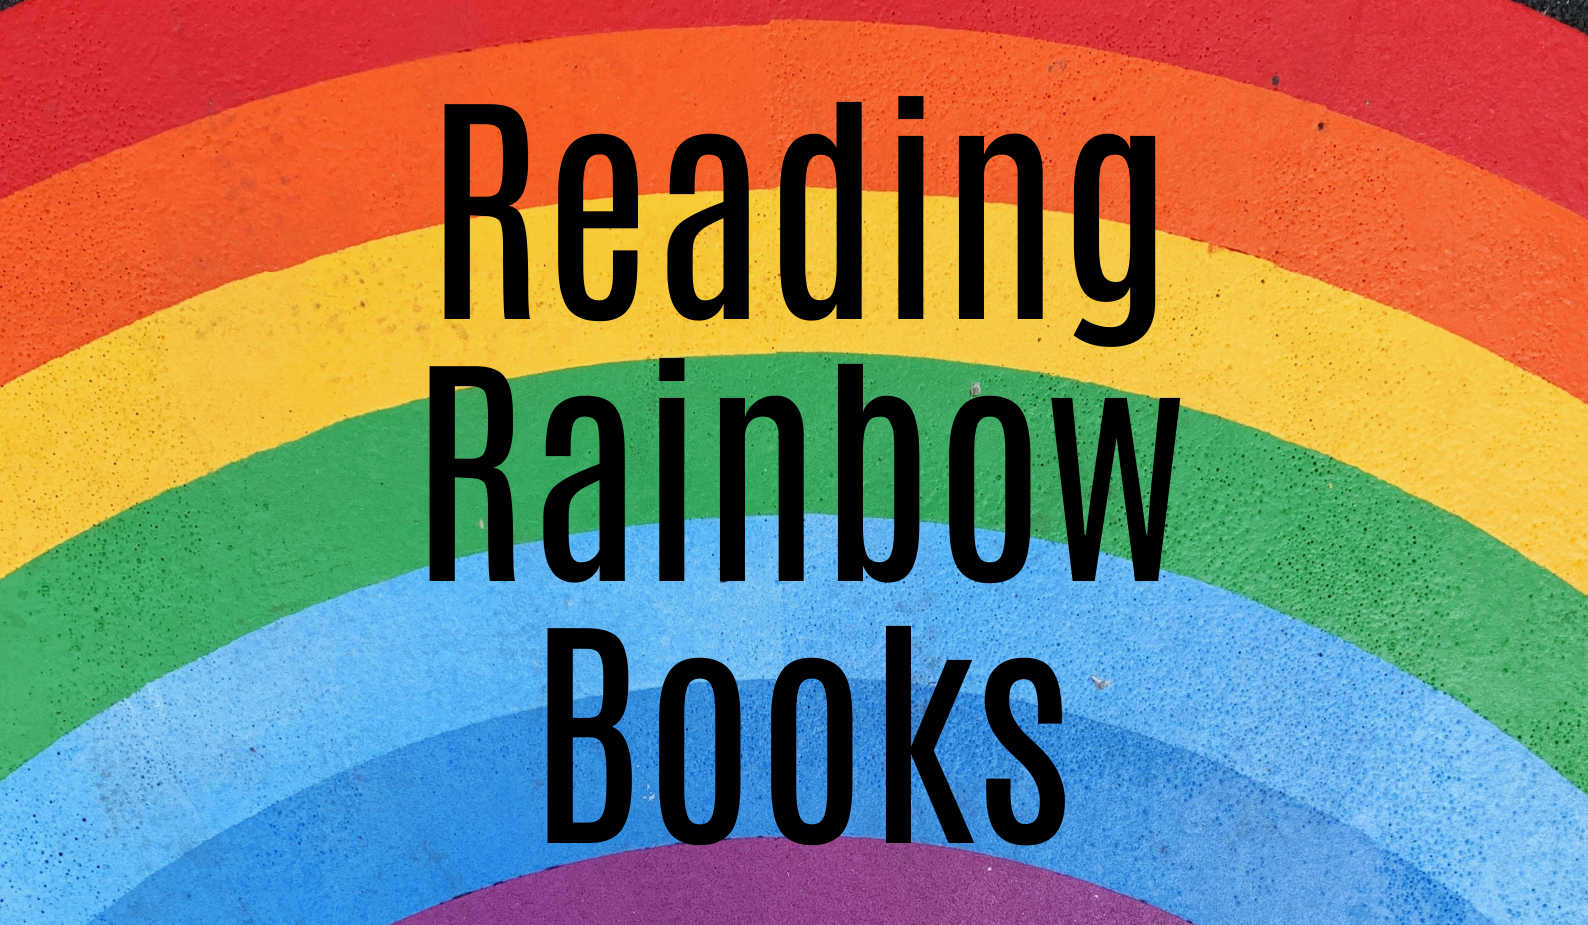 Reading Rainbow Books – The Complete List